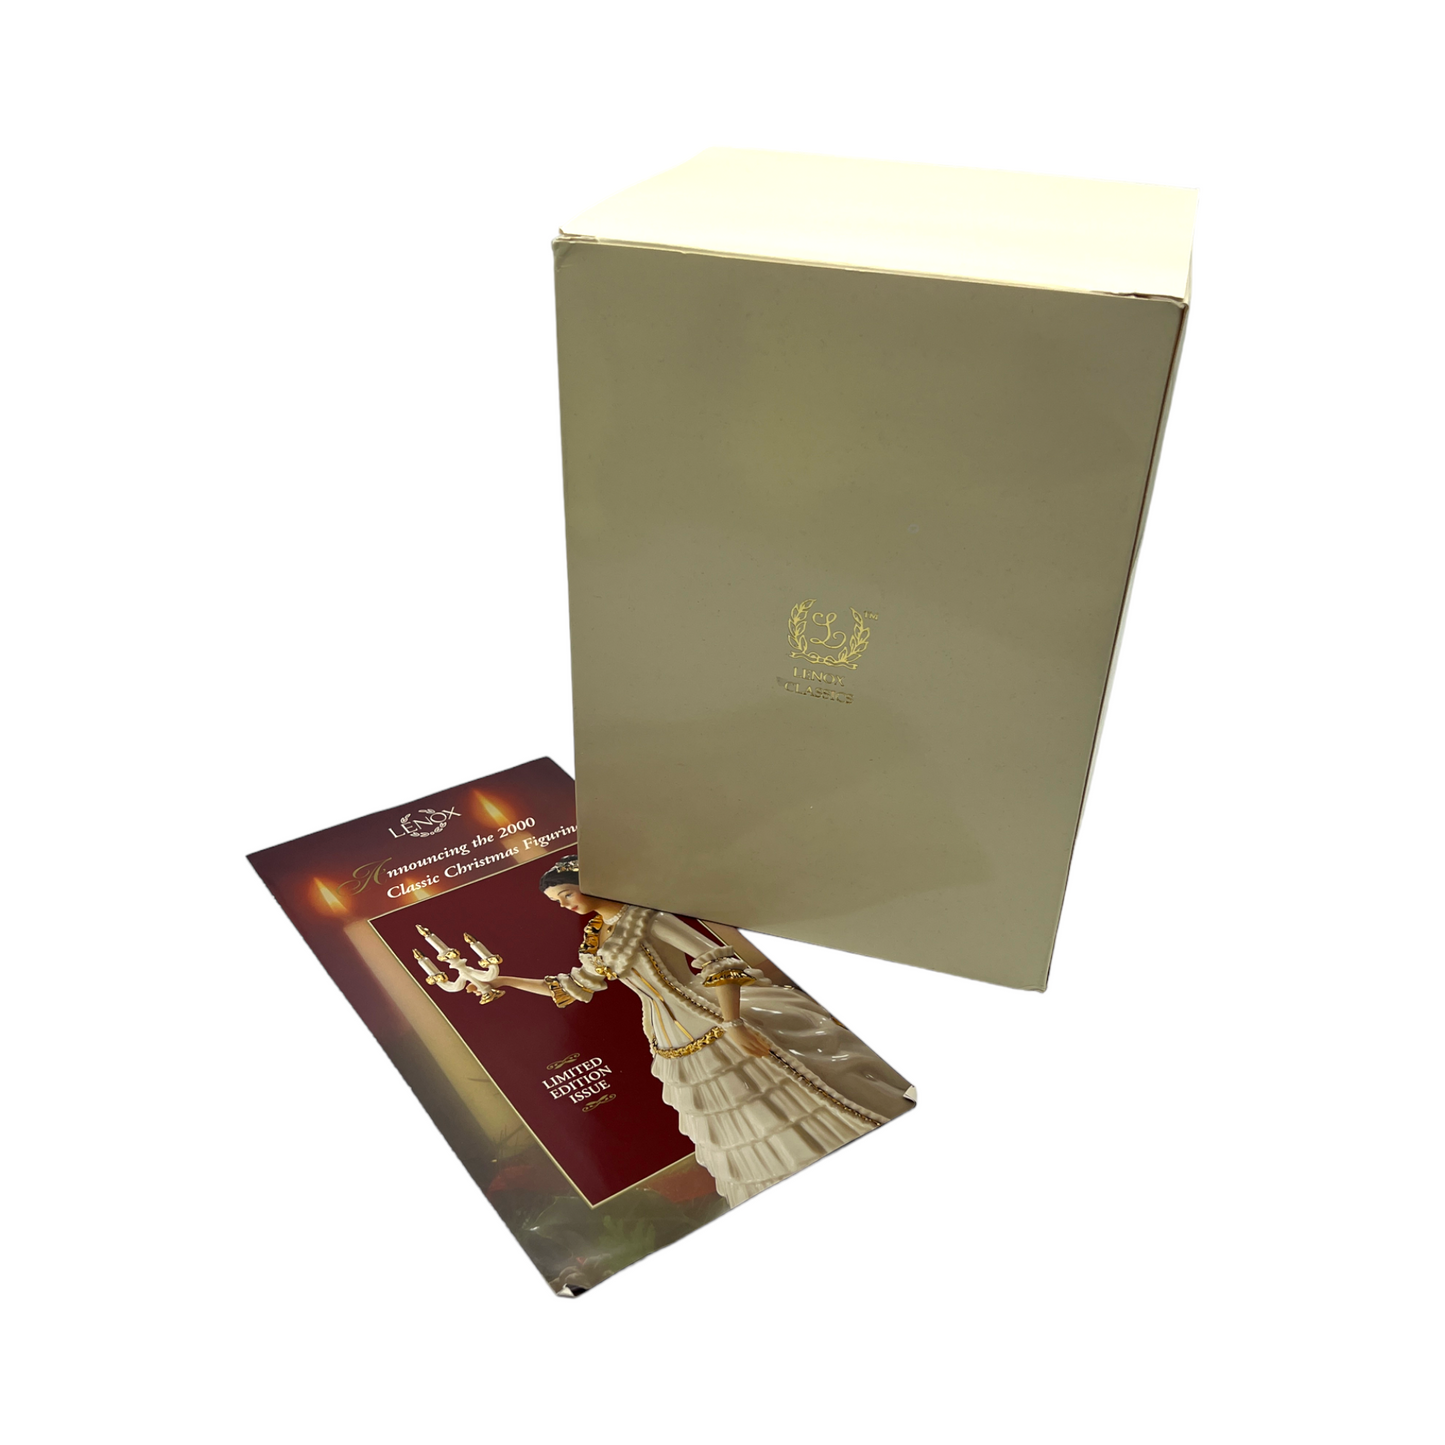 Lenox - Light Of Christmas - 2000 Ivory Classic Figurine - Limited Edition - Original Box - 9.25"